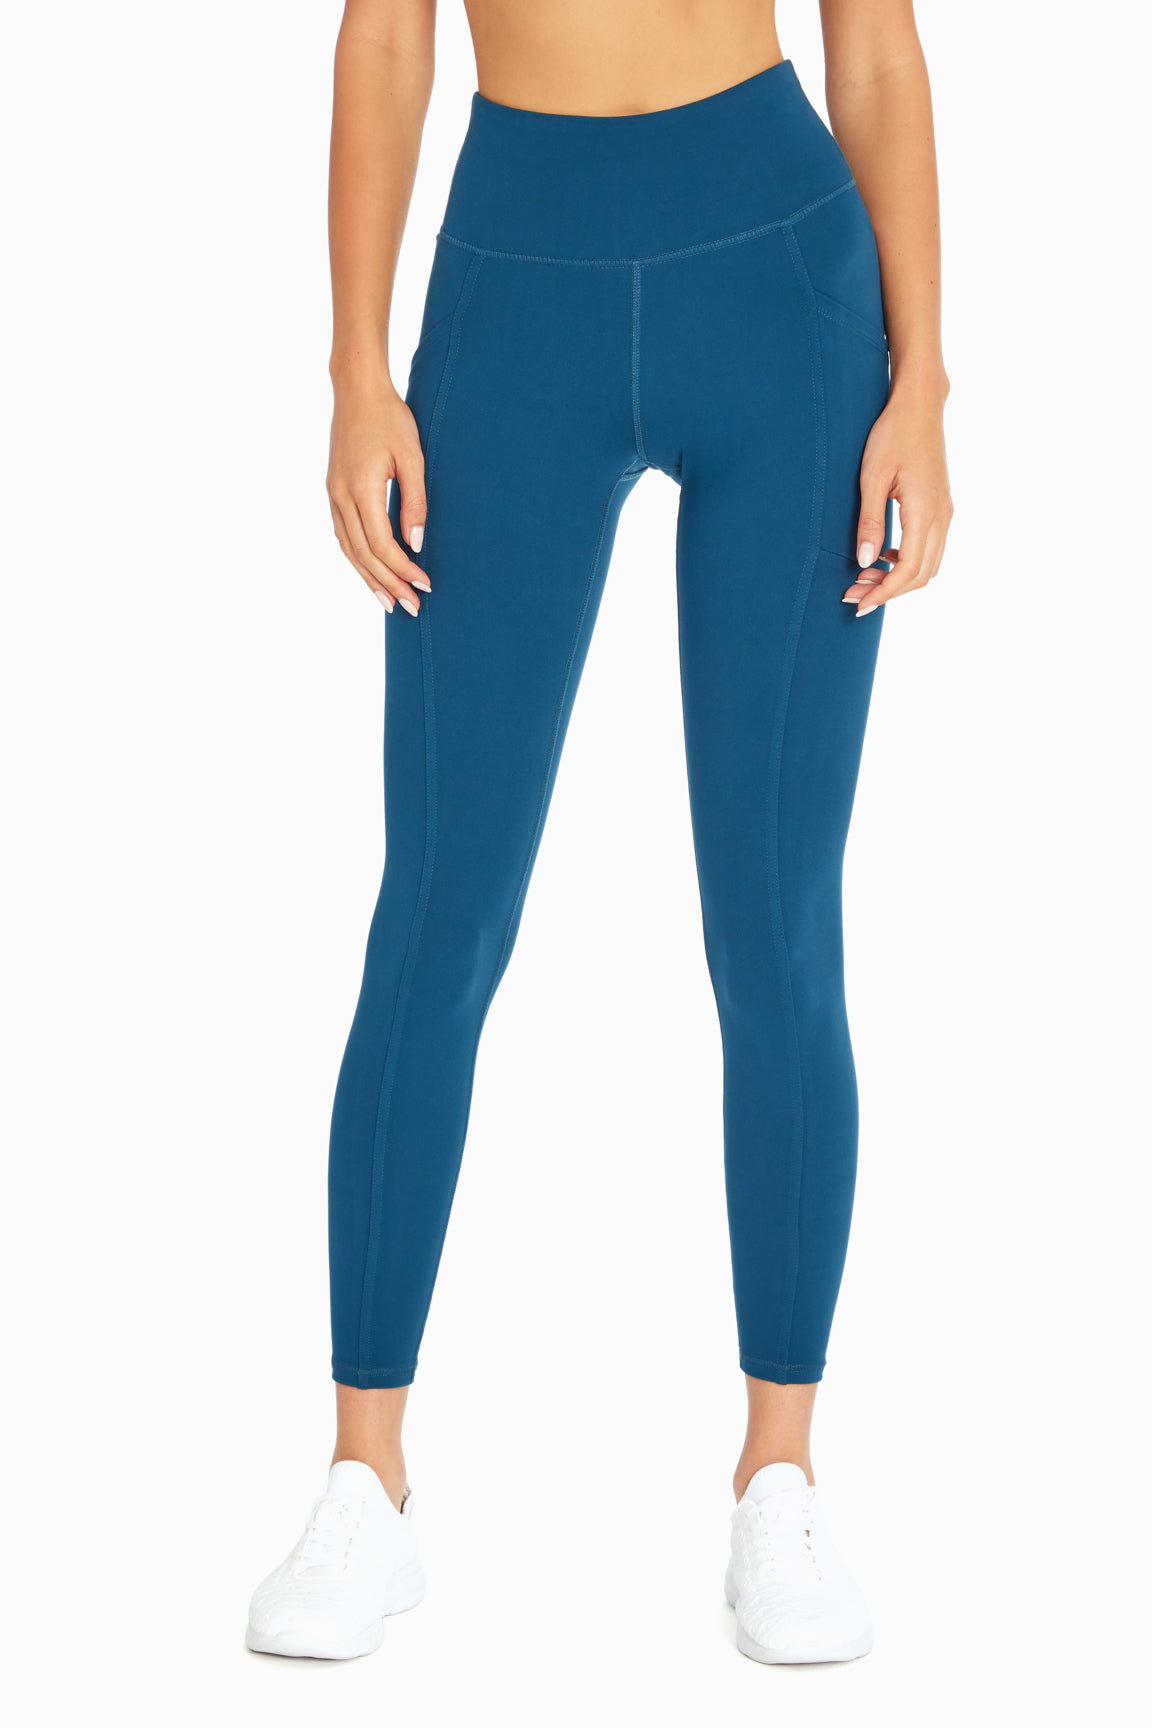 LA7 Women's Stash Pocket High-Rise Four-Way Stretch Legging Blue (Medium)